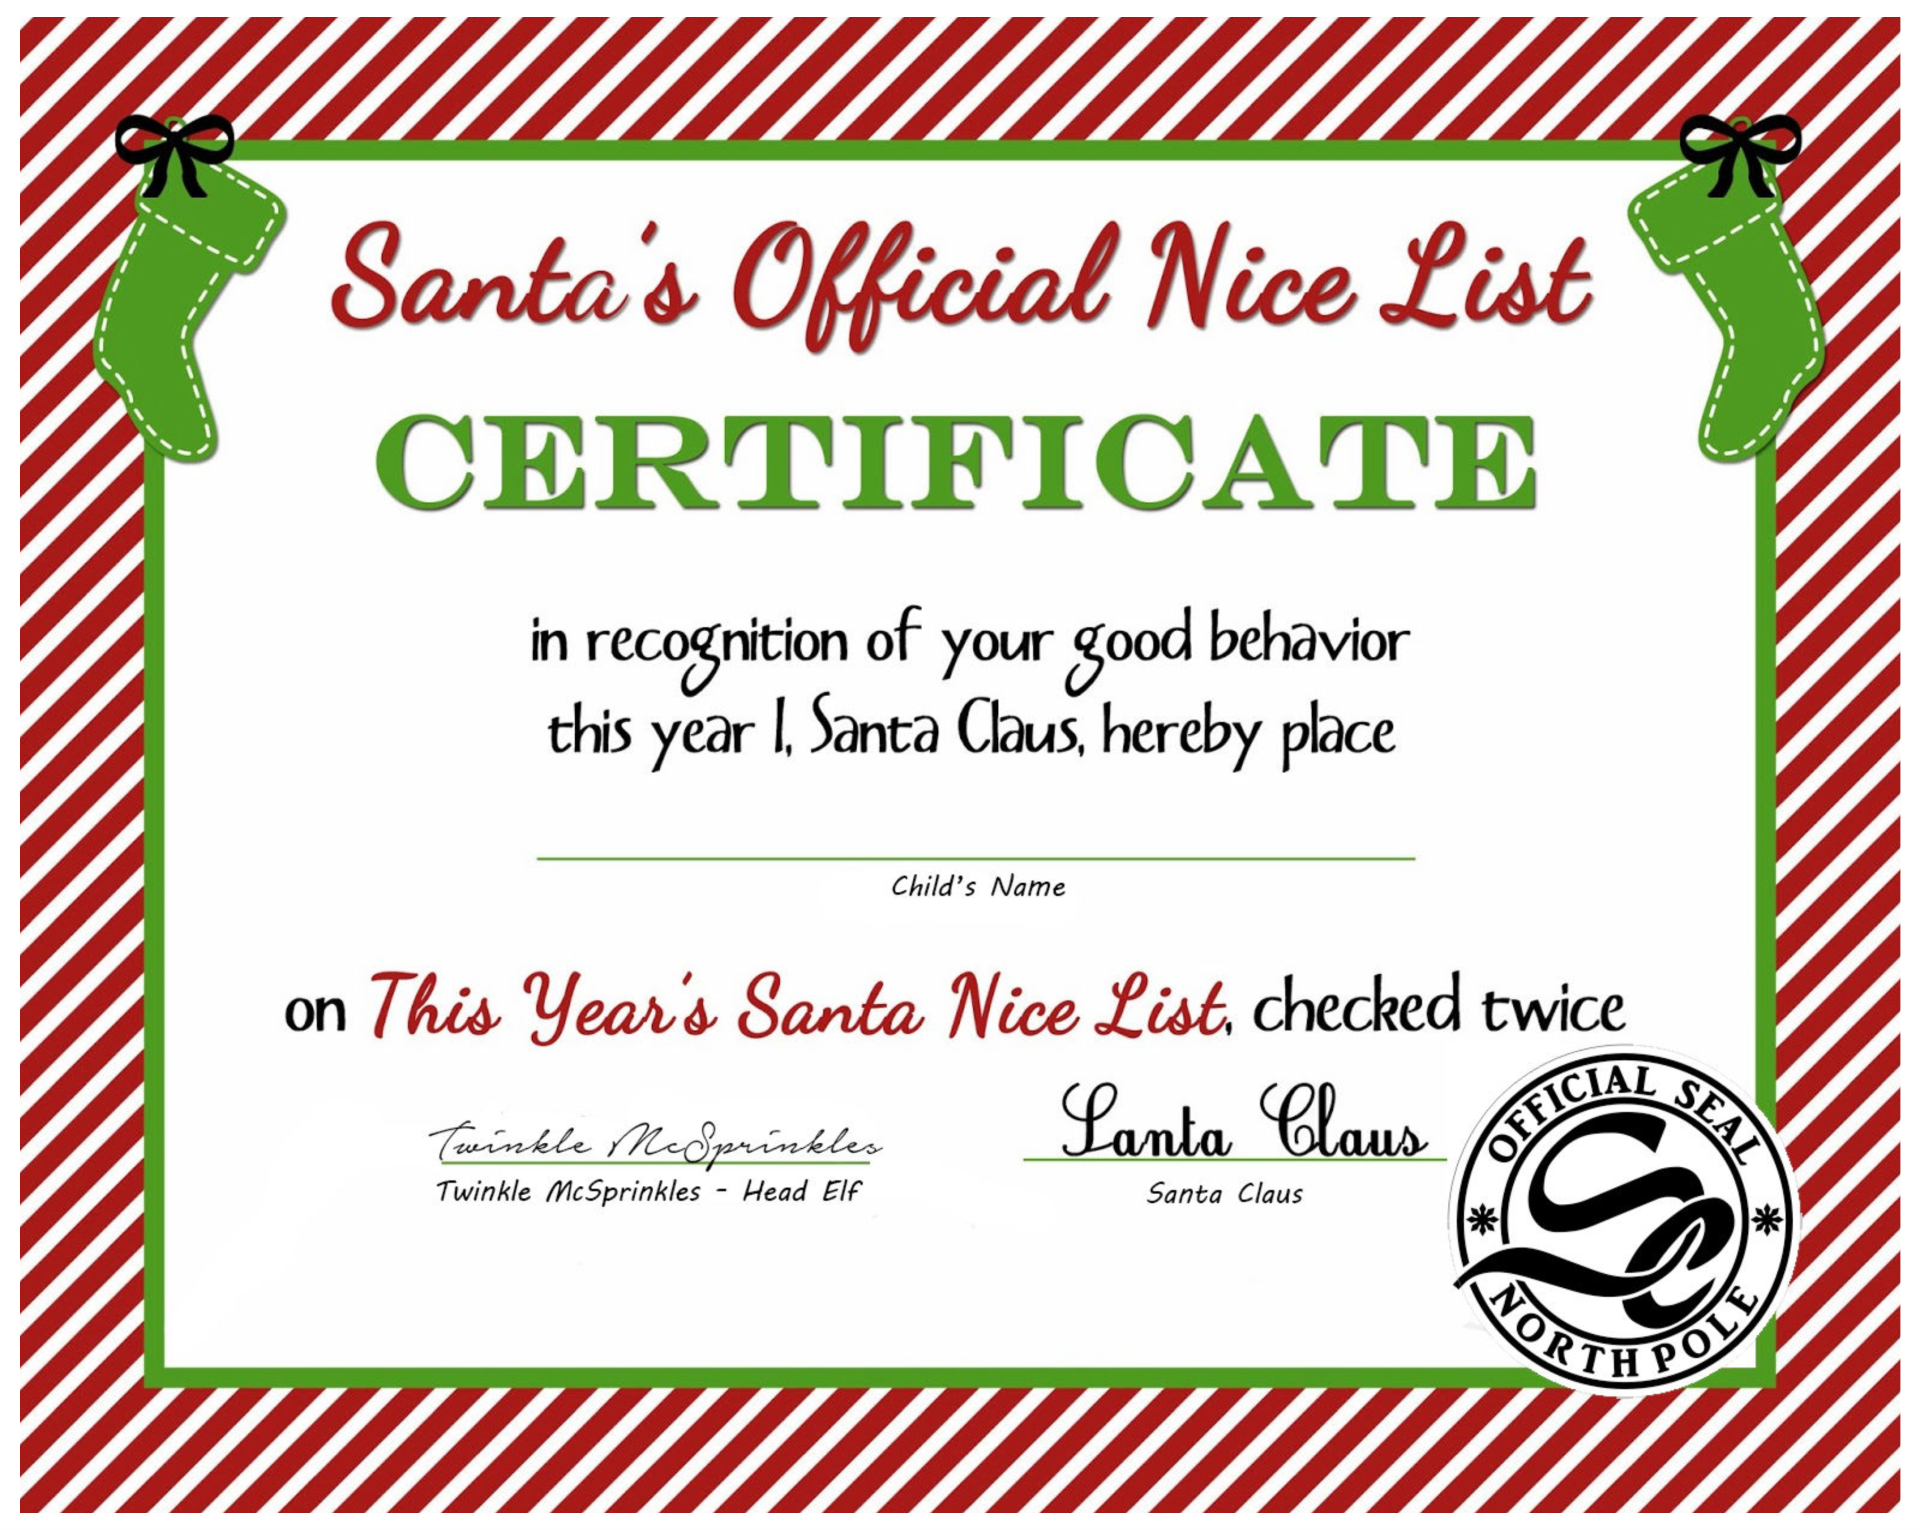 Blank Nice List Certificate From Santa